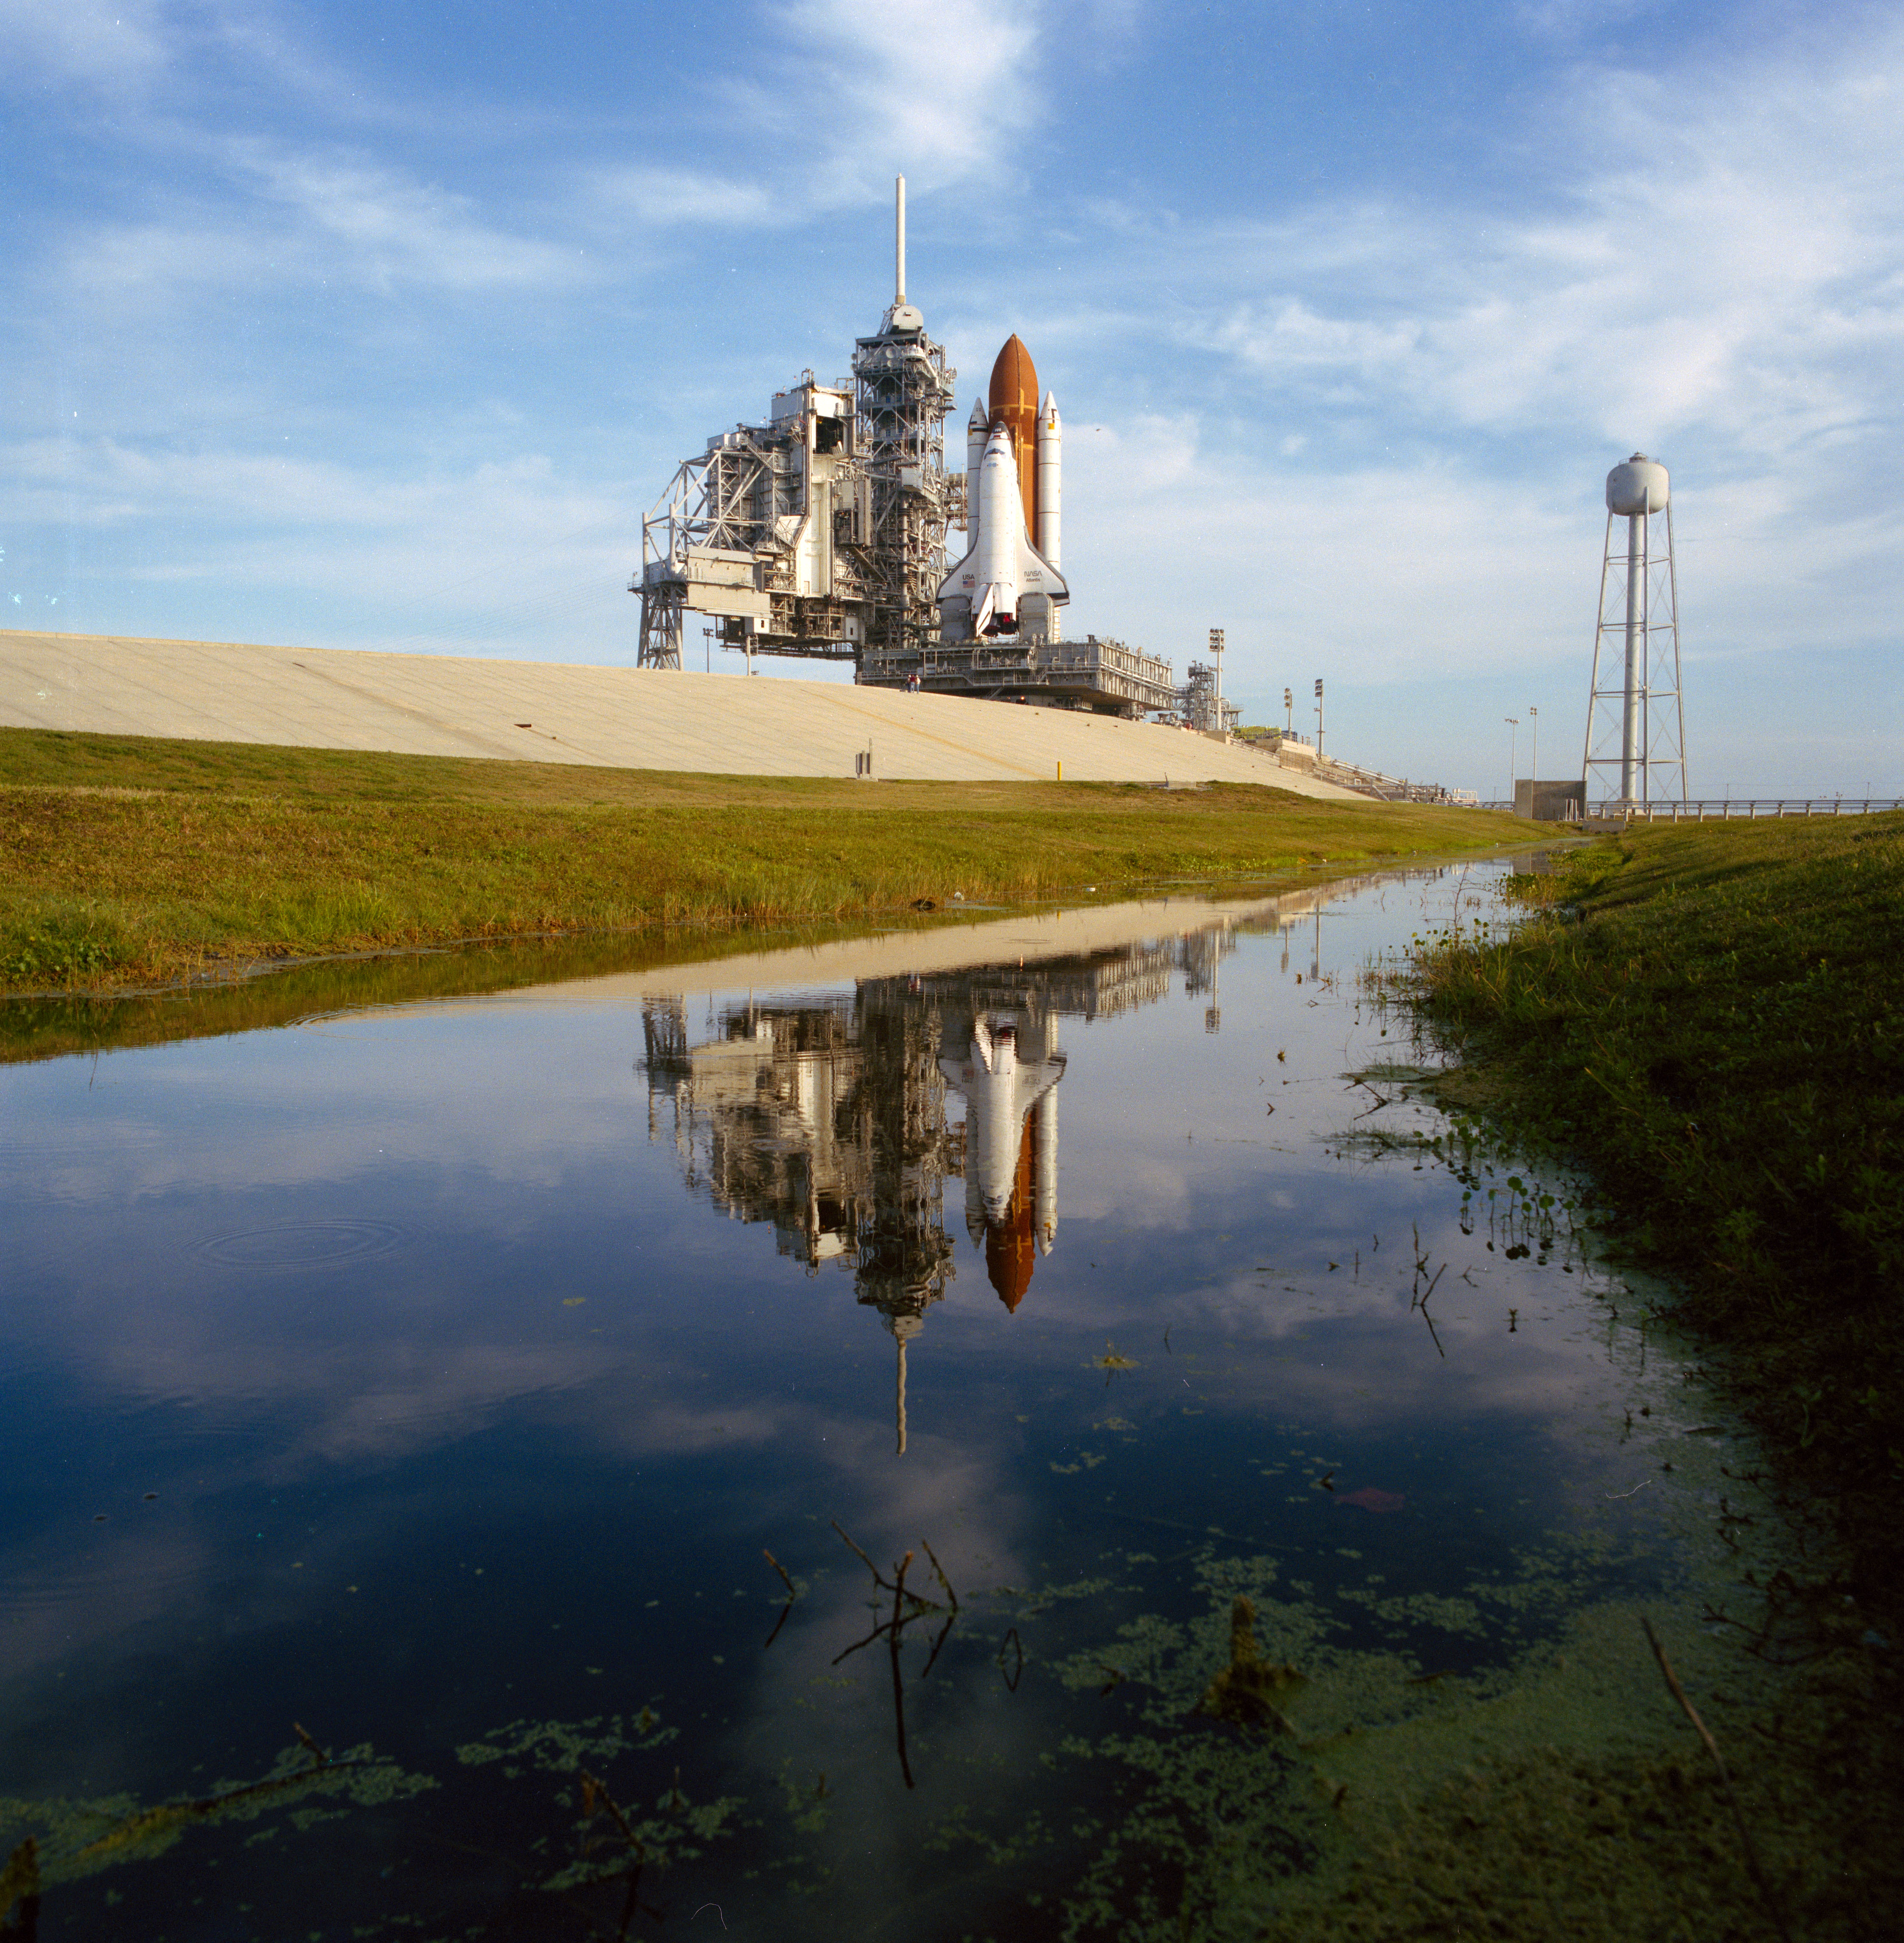 Space shuttle Atlantis arrives at Launch Pad 39B